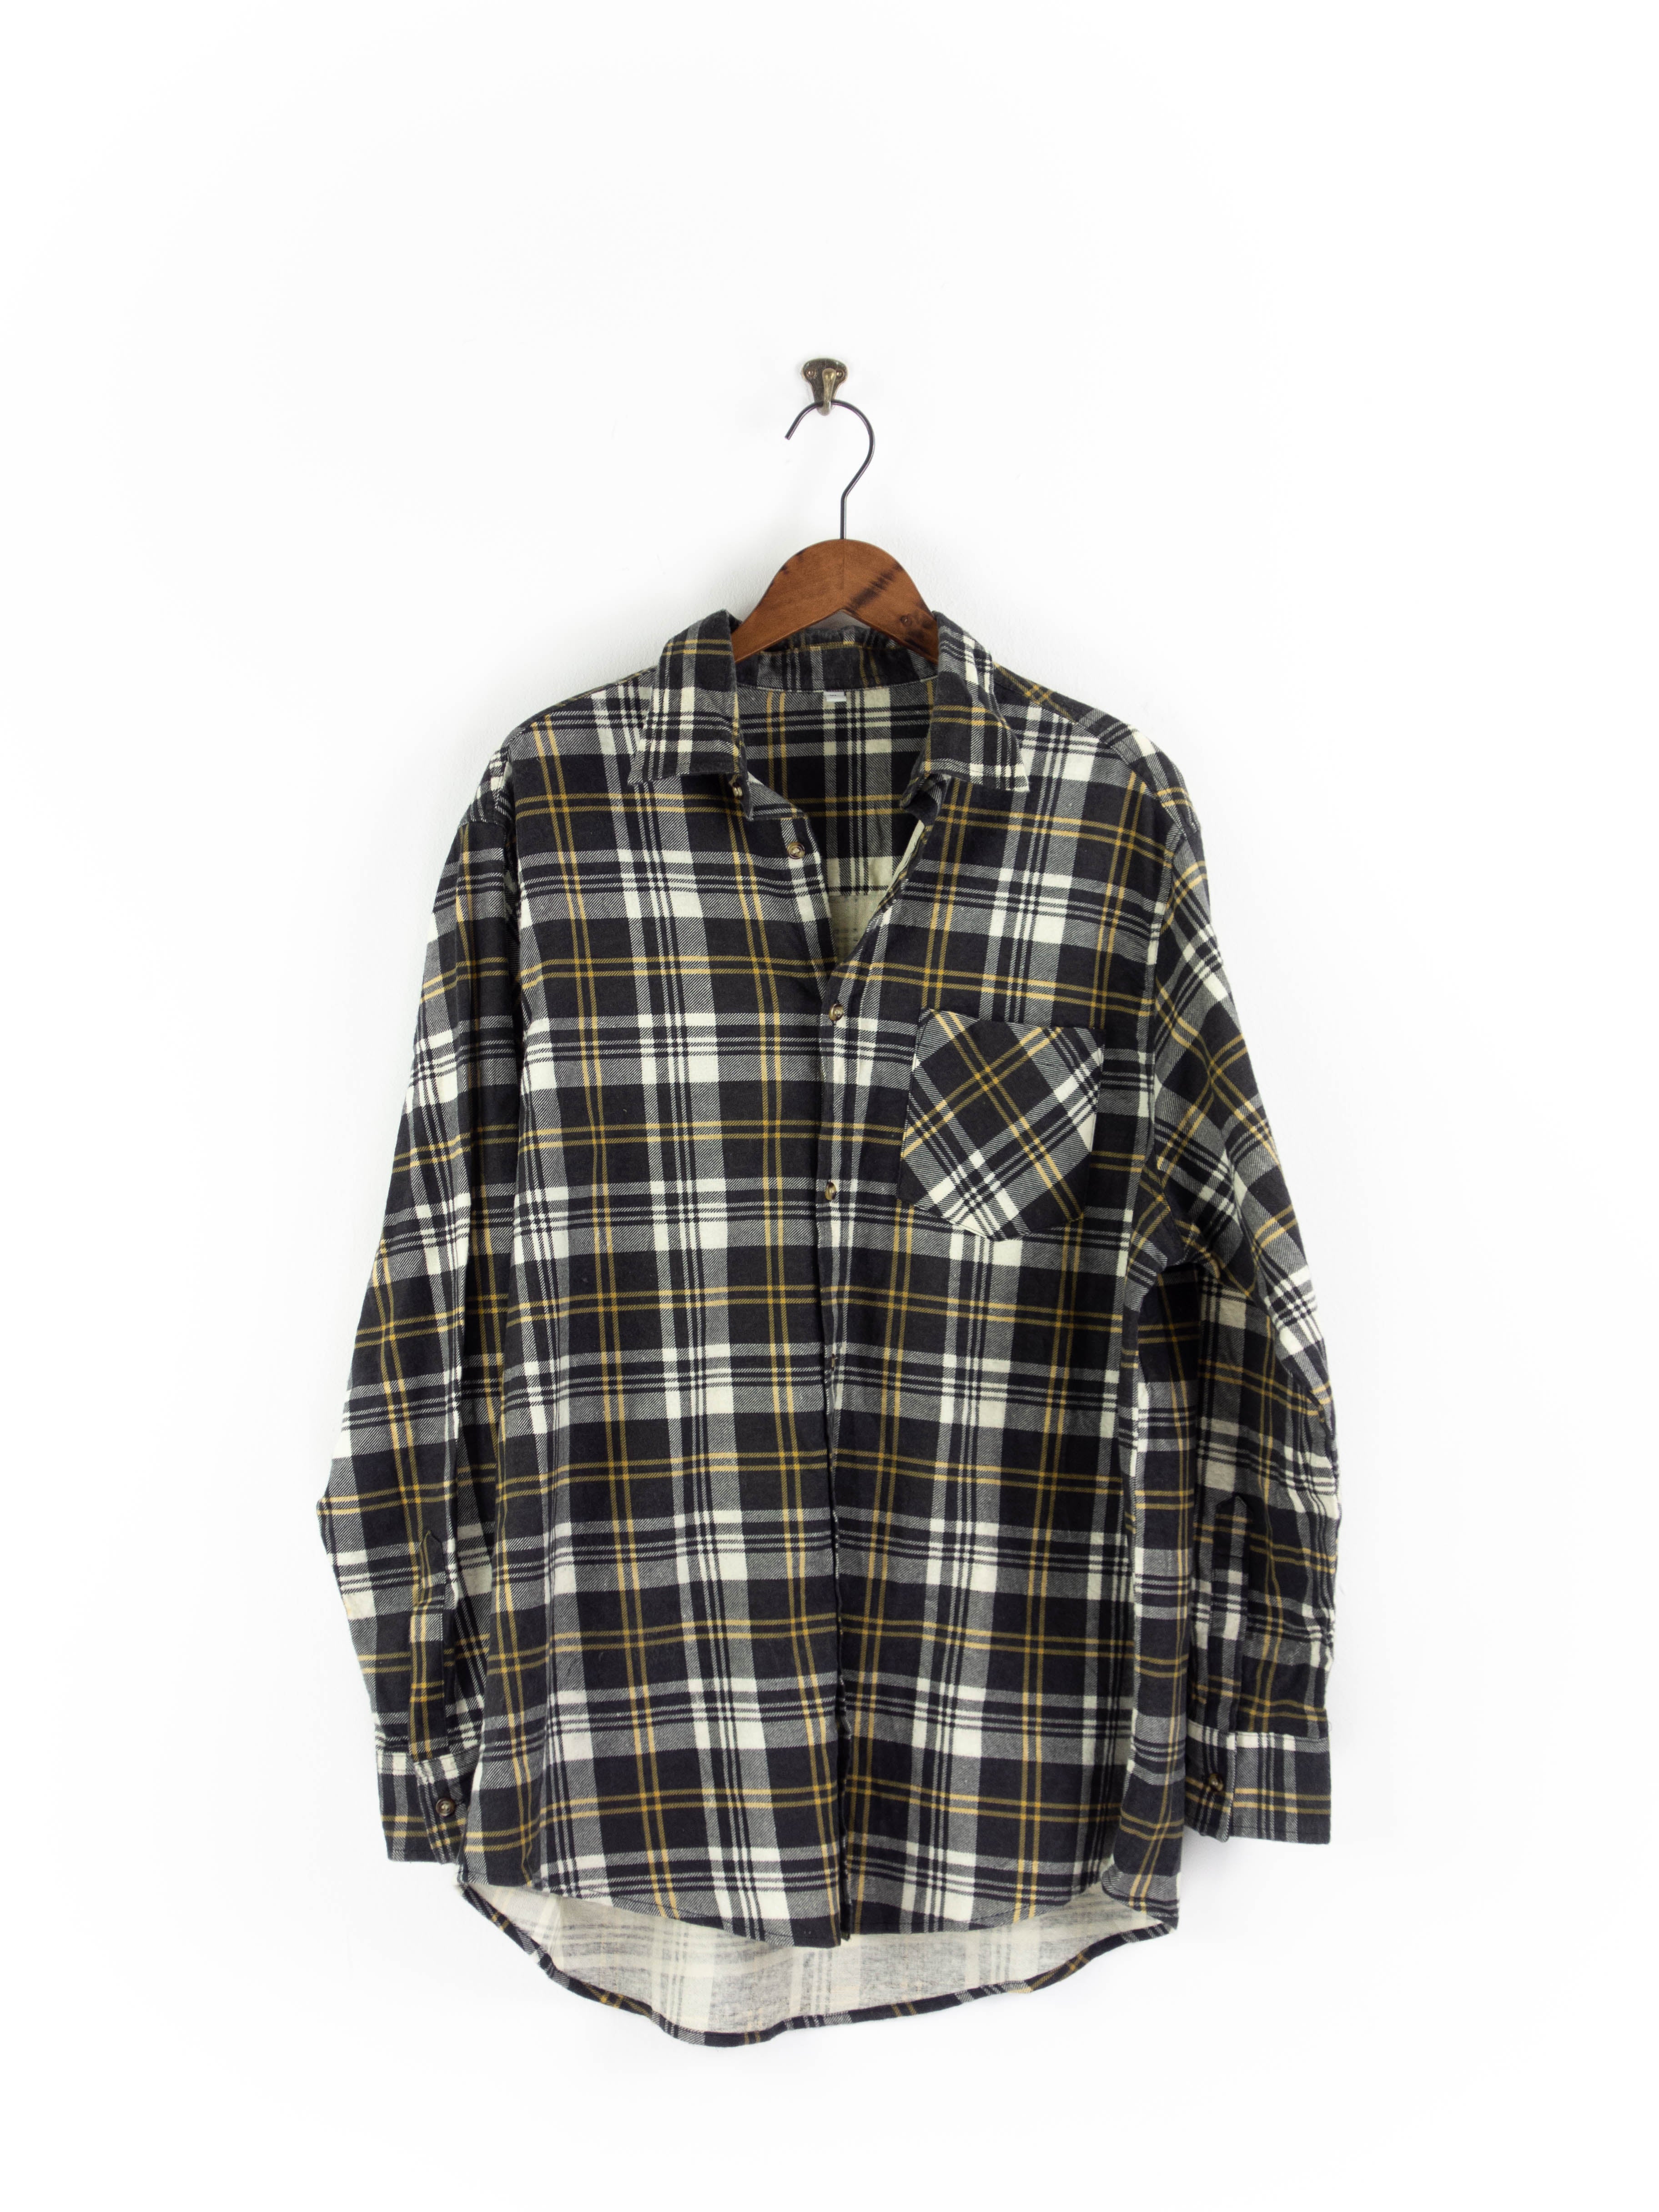 Flannel shirt XL/XXL